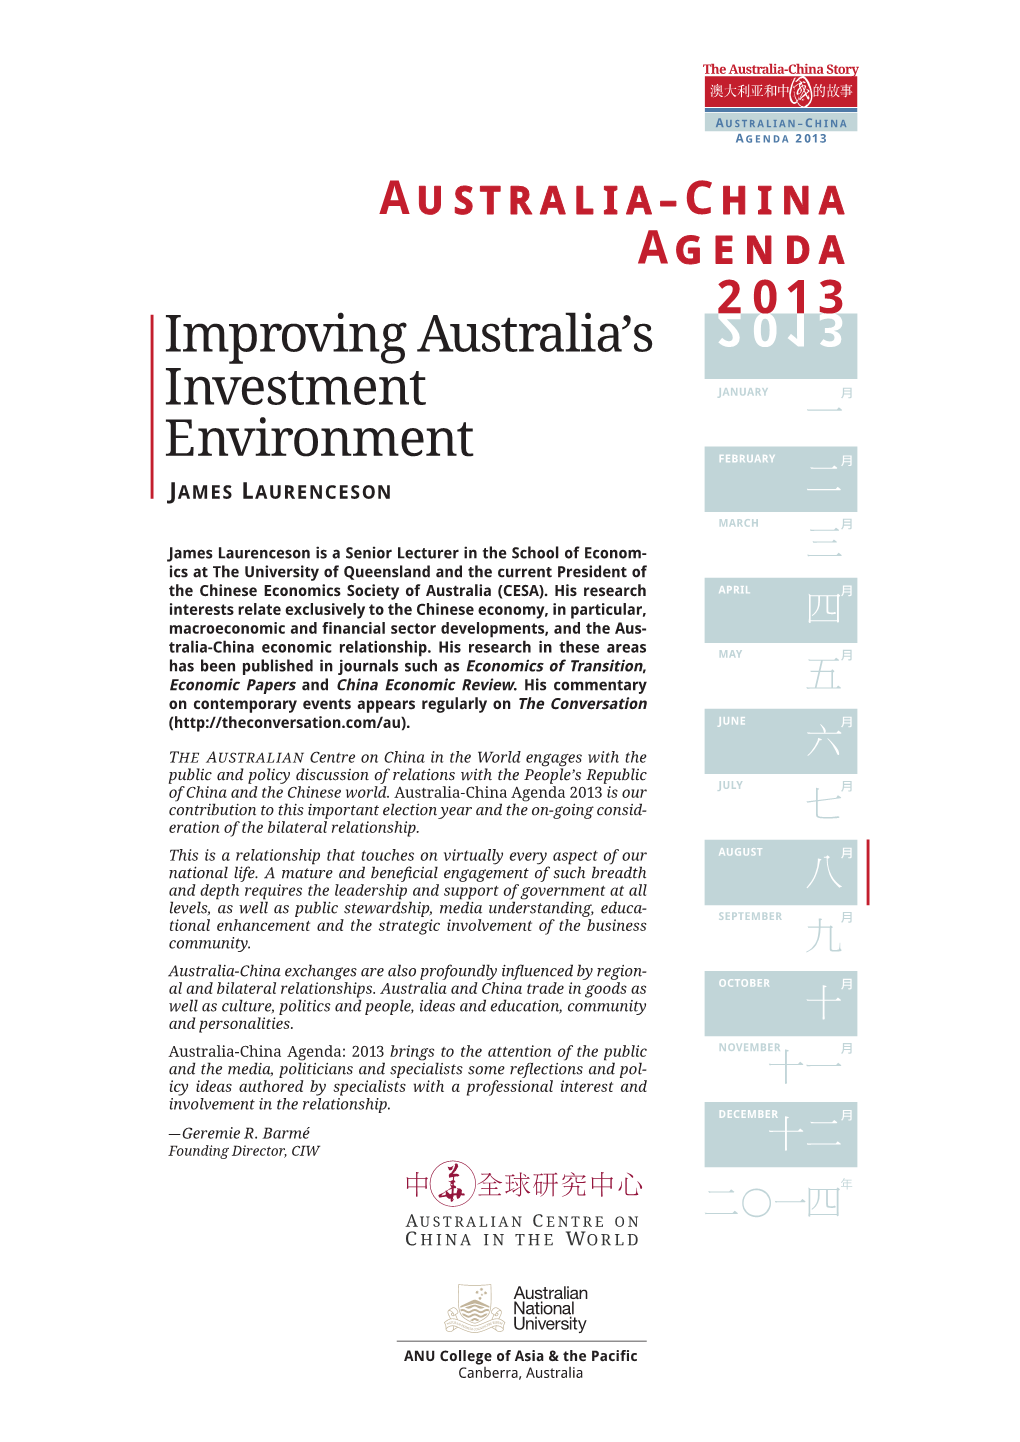 Improving Australia's Investment Environment